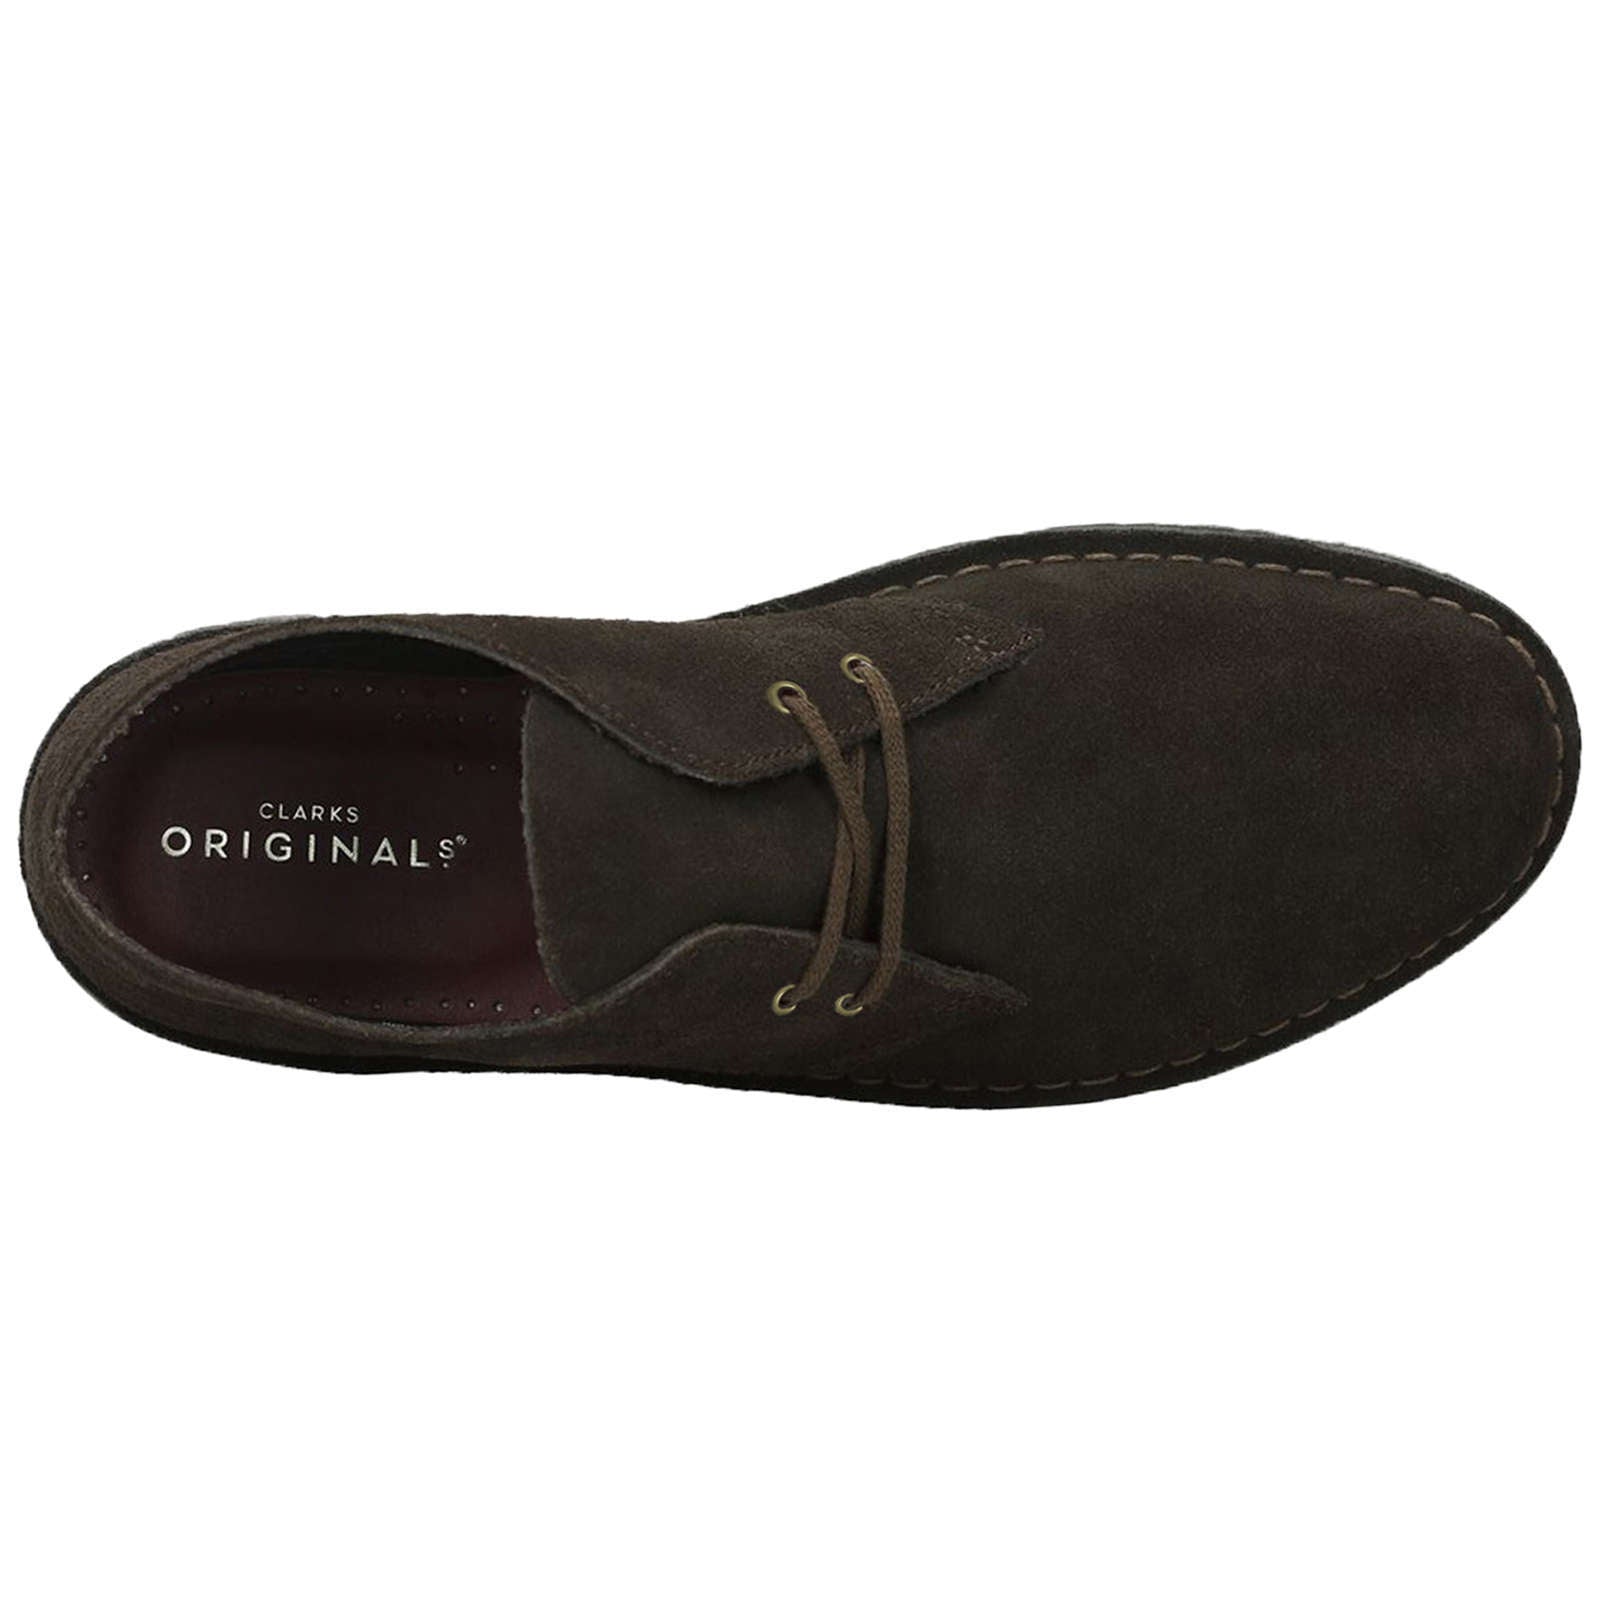 Clarks Originals Desert Boot Suede Leather Men's Boots#color_brown brown